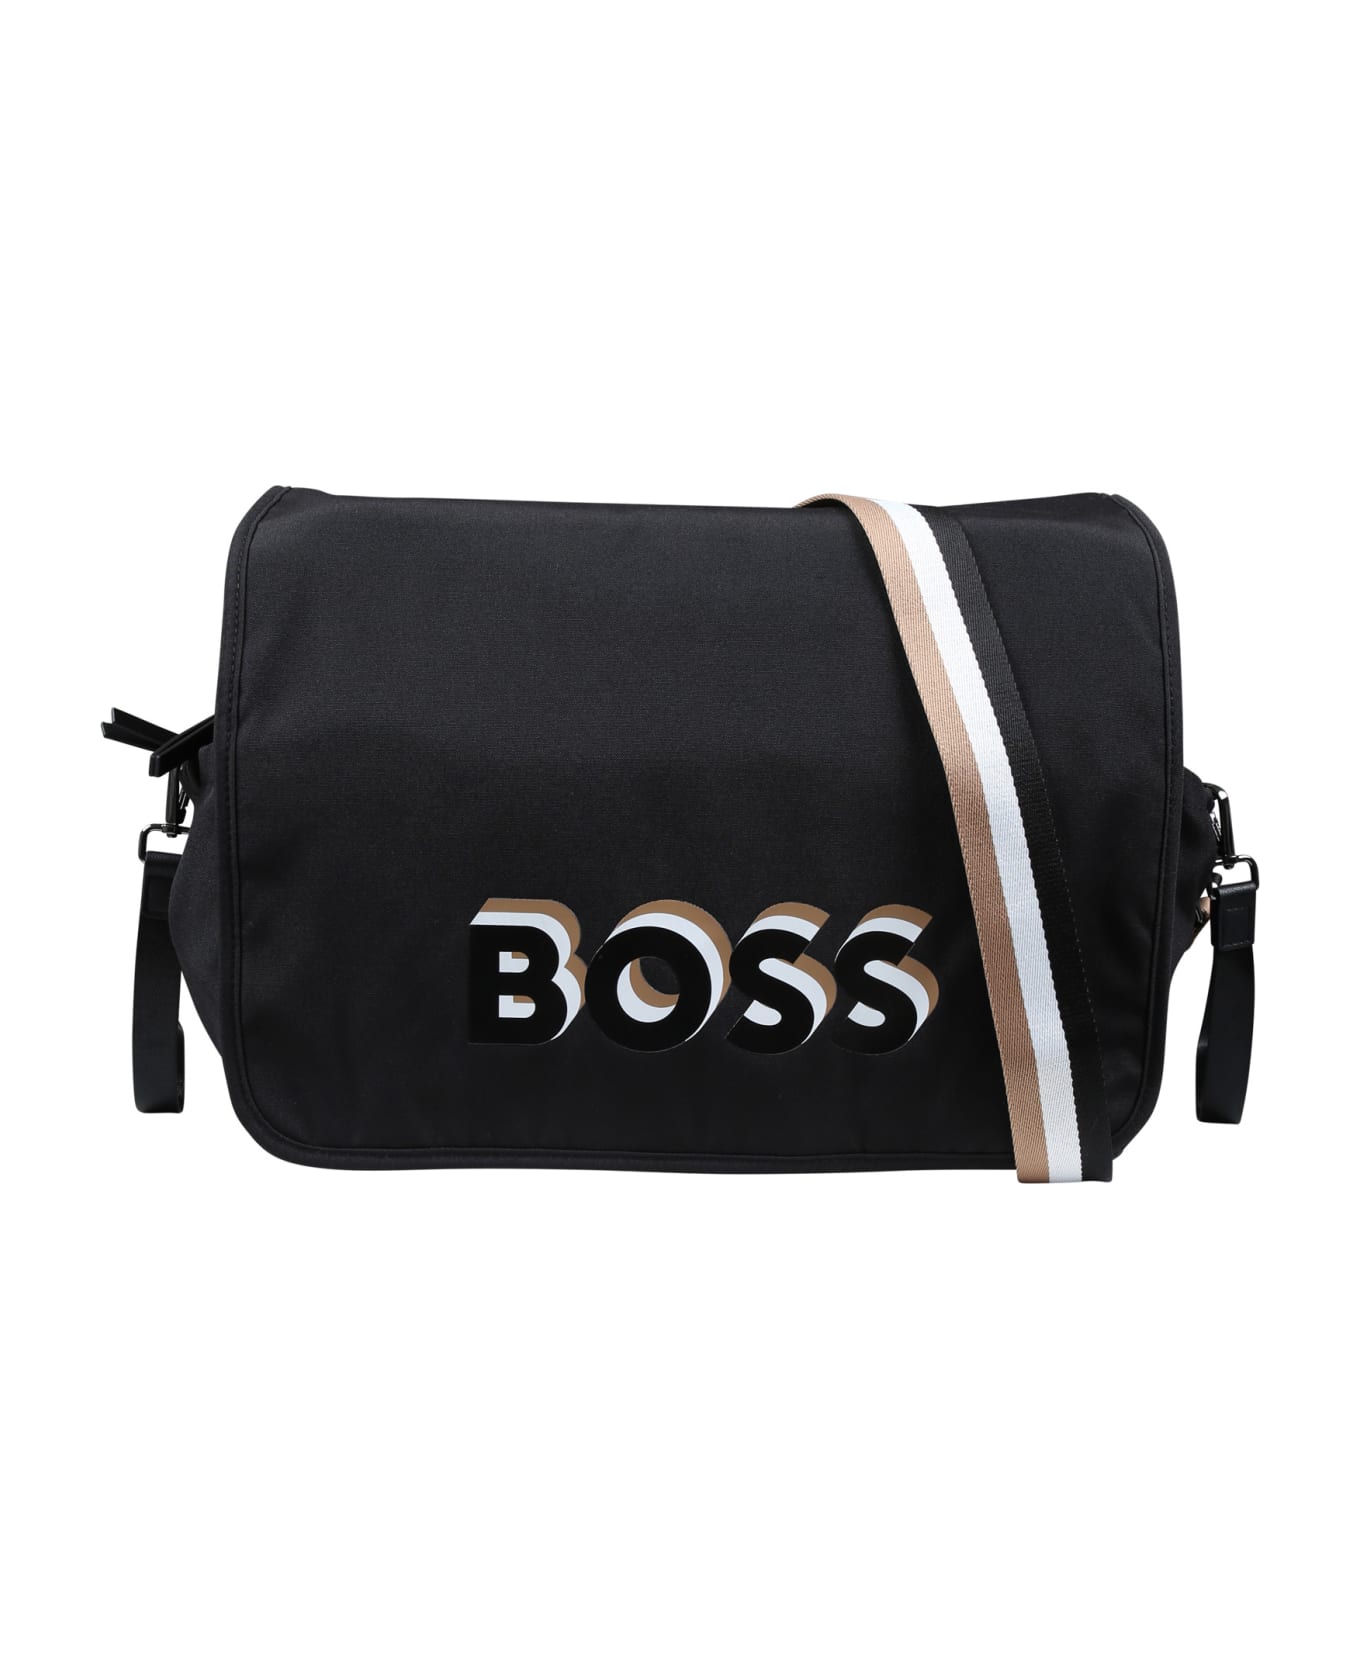 Hugo Boss Black Mother Bag For Baby Boy With Logo - Black アクセサリー＆ギフト